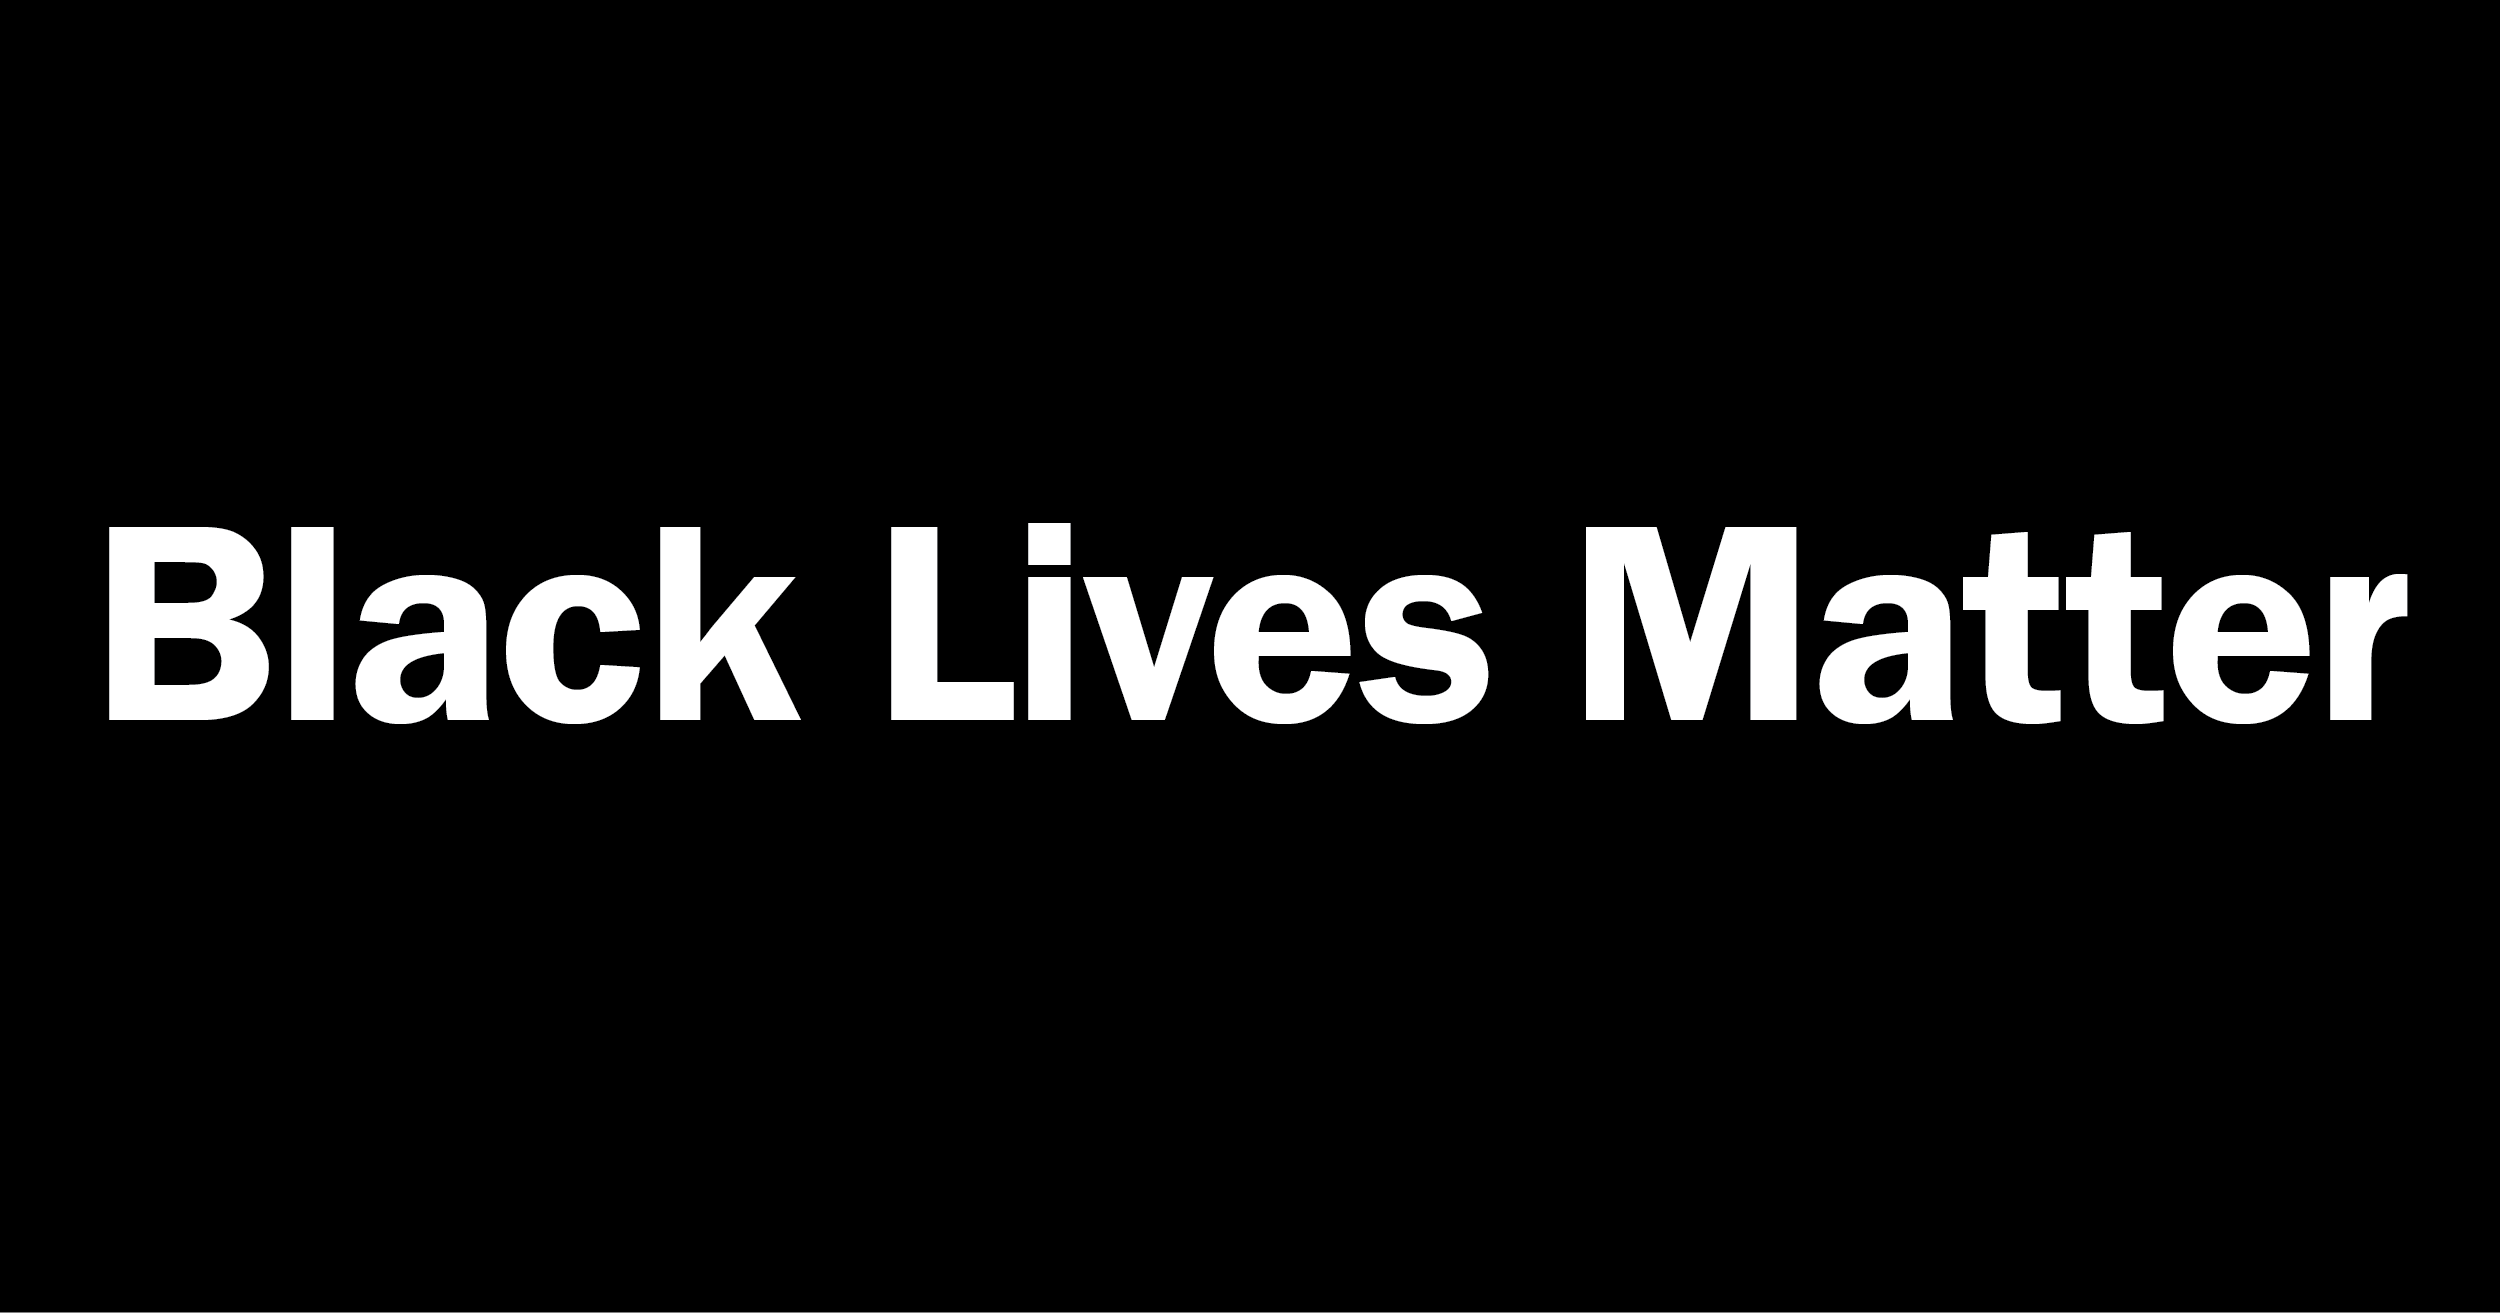 Black background with white letters "Black Lives Matter"